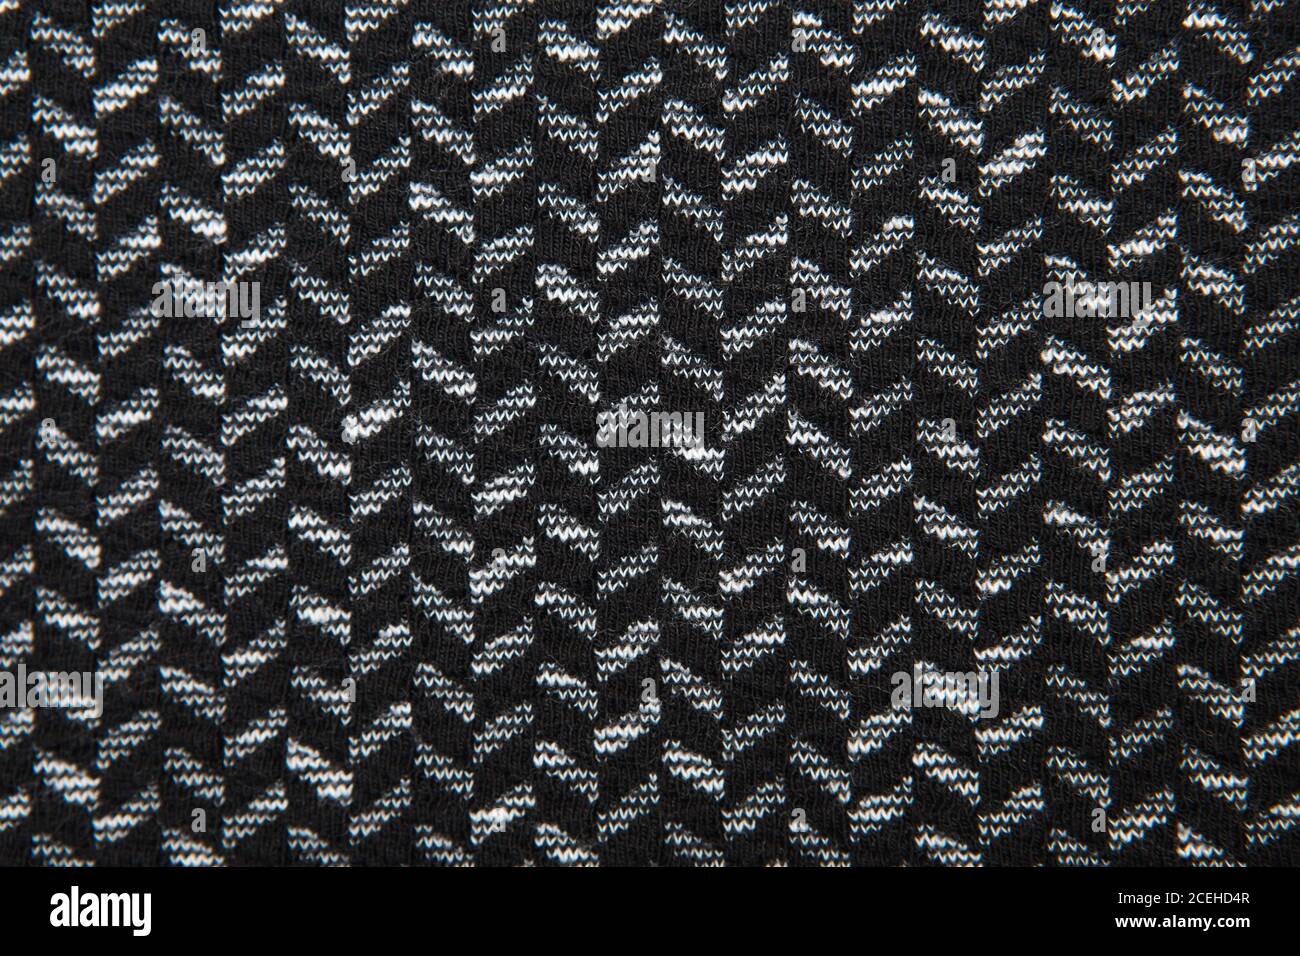 Black and white herringbone fabric pattern texture background closeup Stock Photo